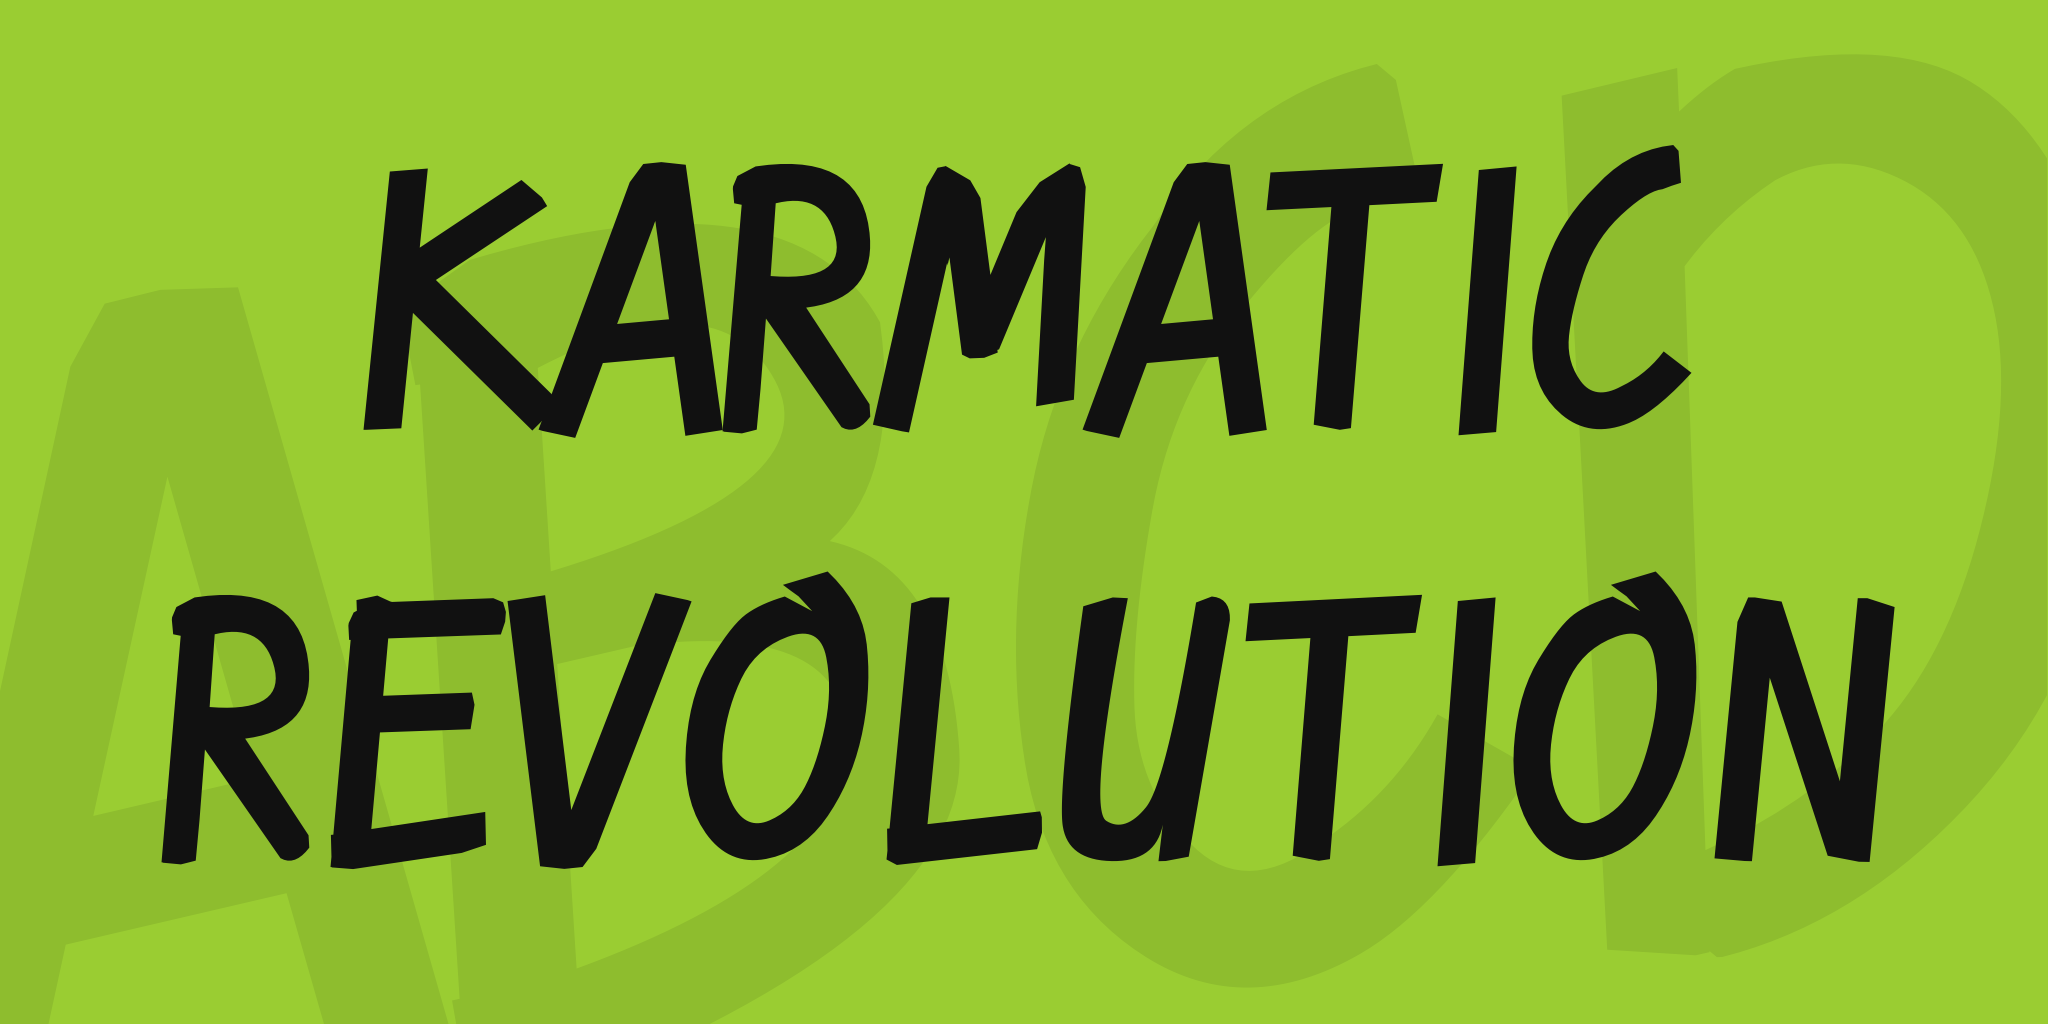 Karmatic Revolution